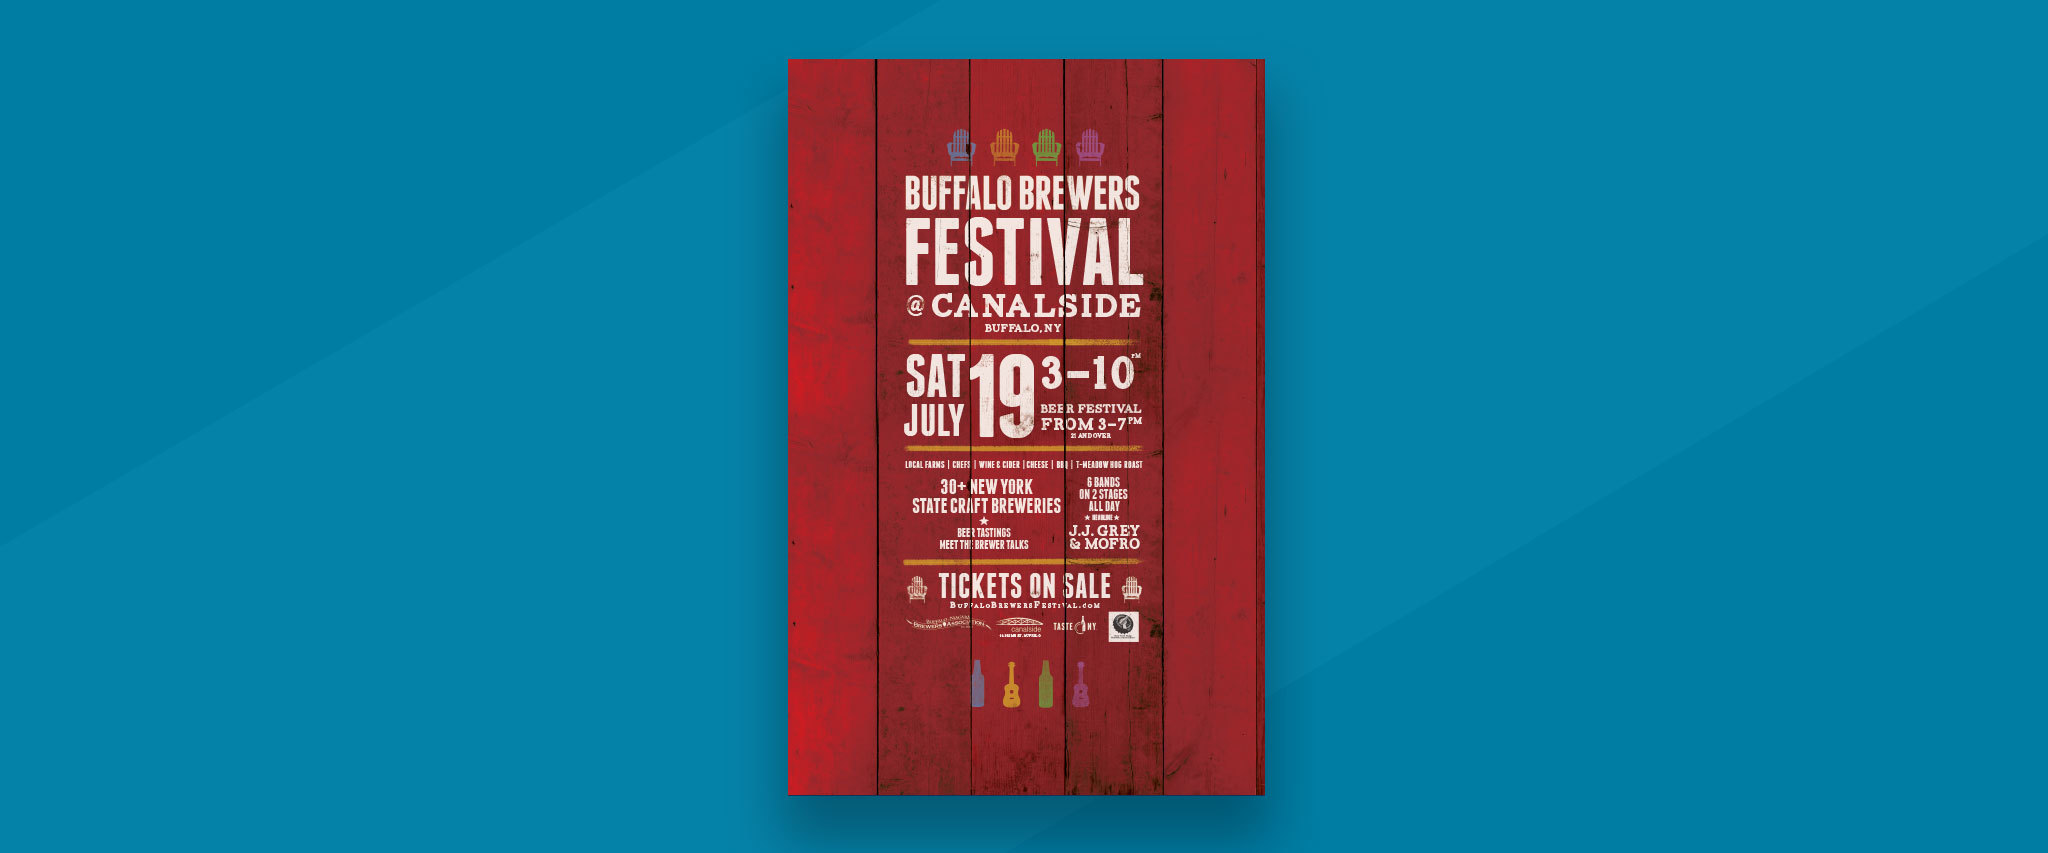 Buffalo Brewers Festival Gallery